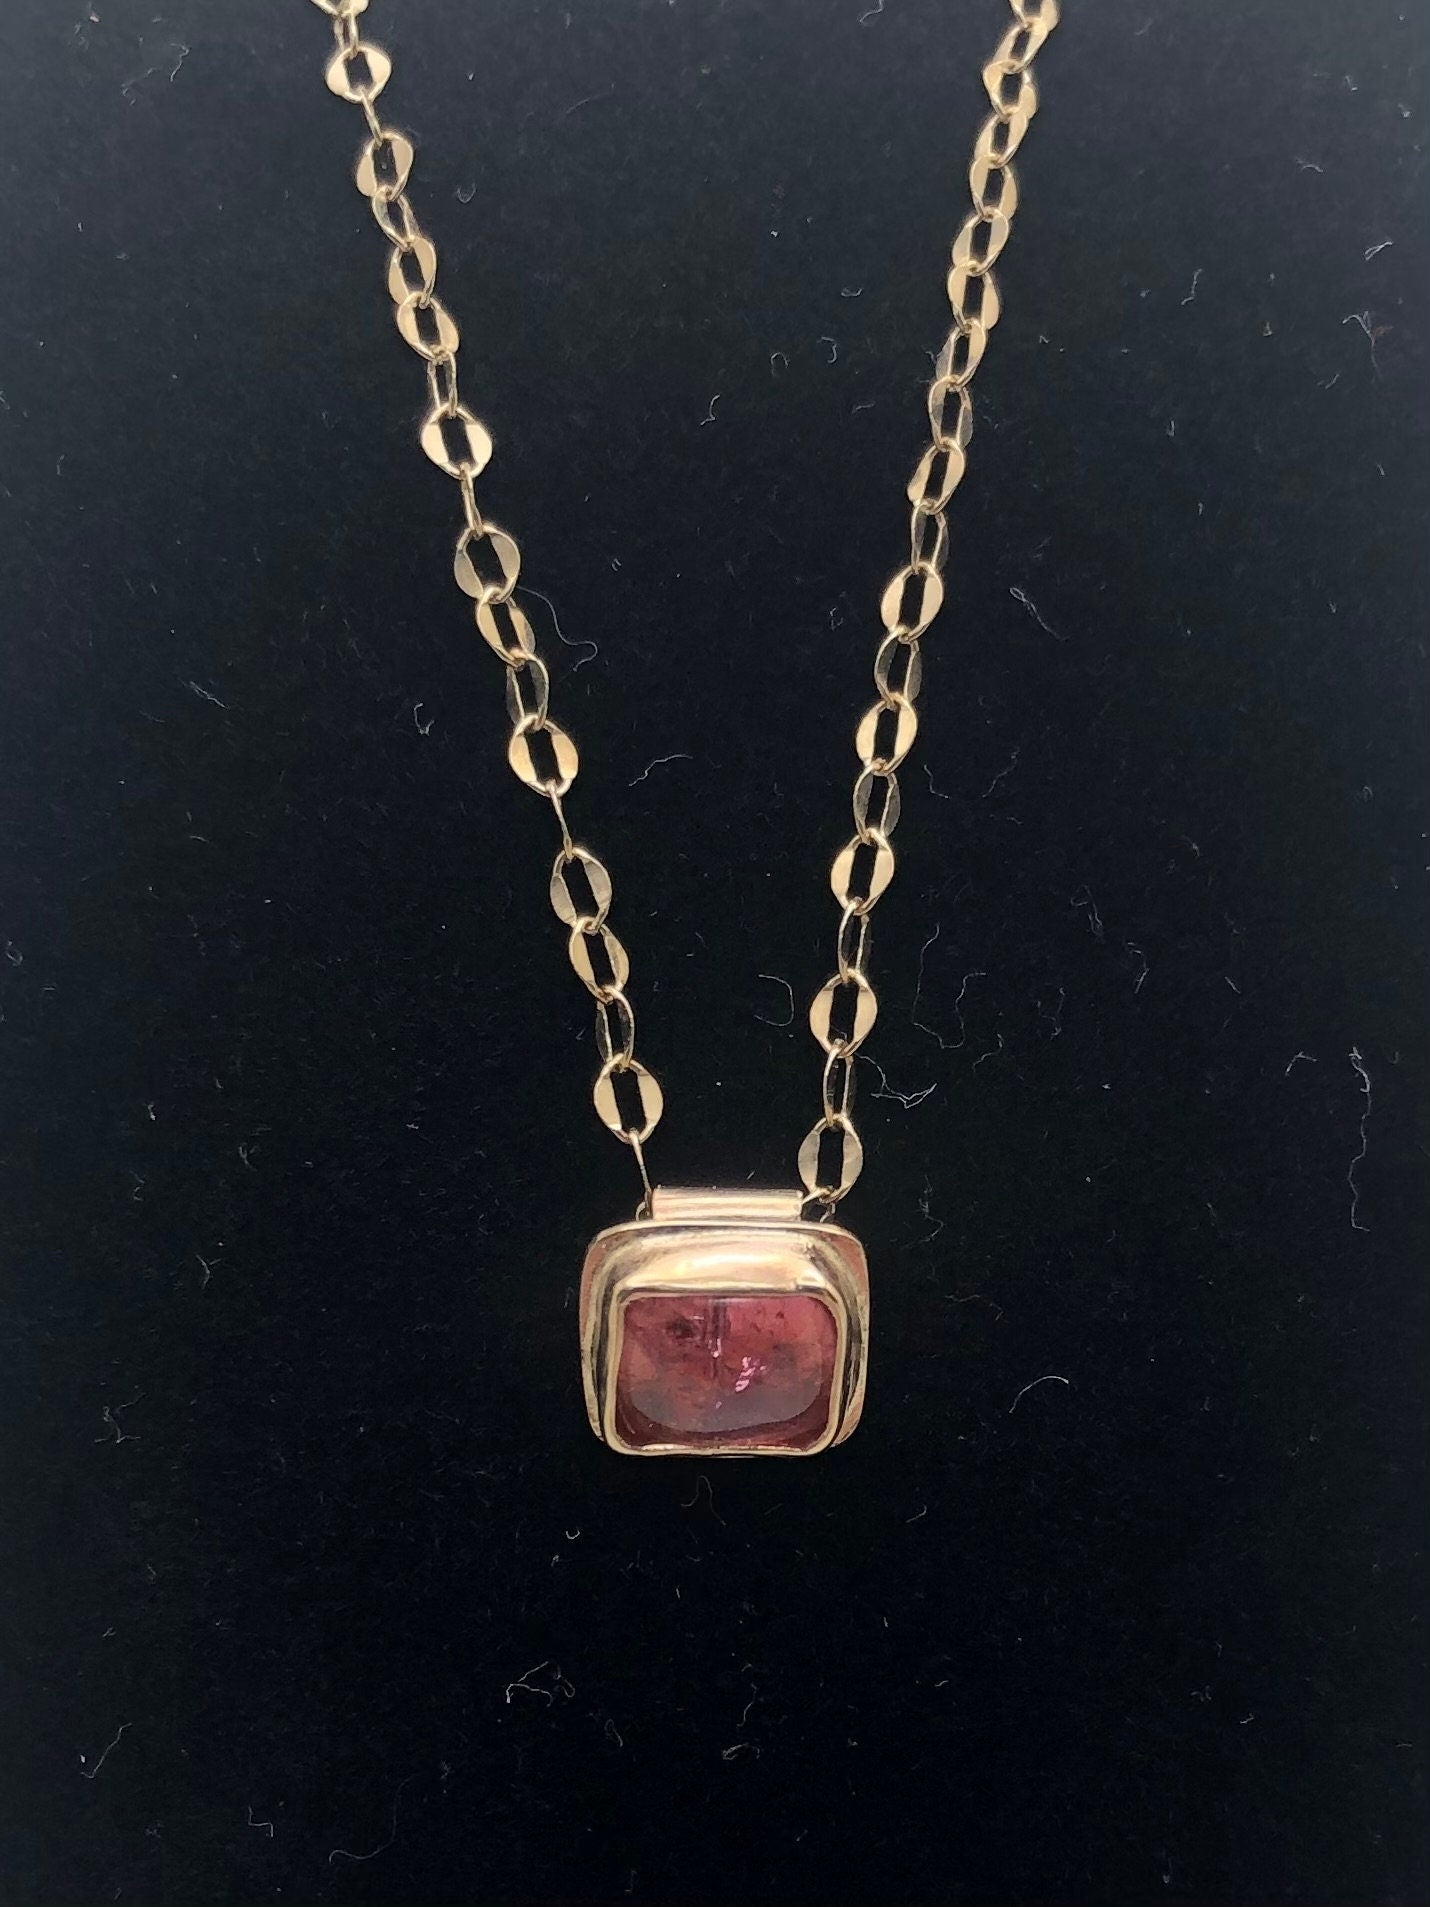 Candy pink tourmaline pendant in solid 14 karat gold